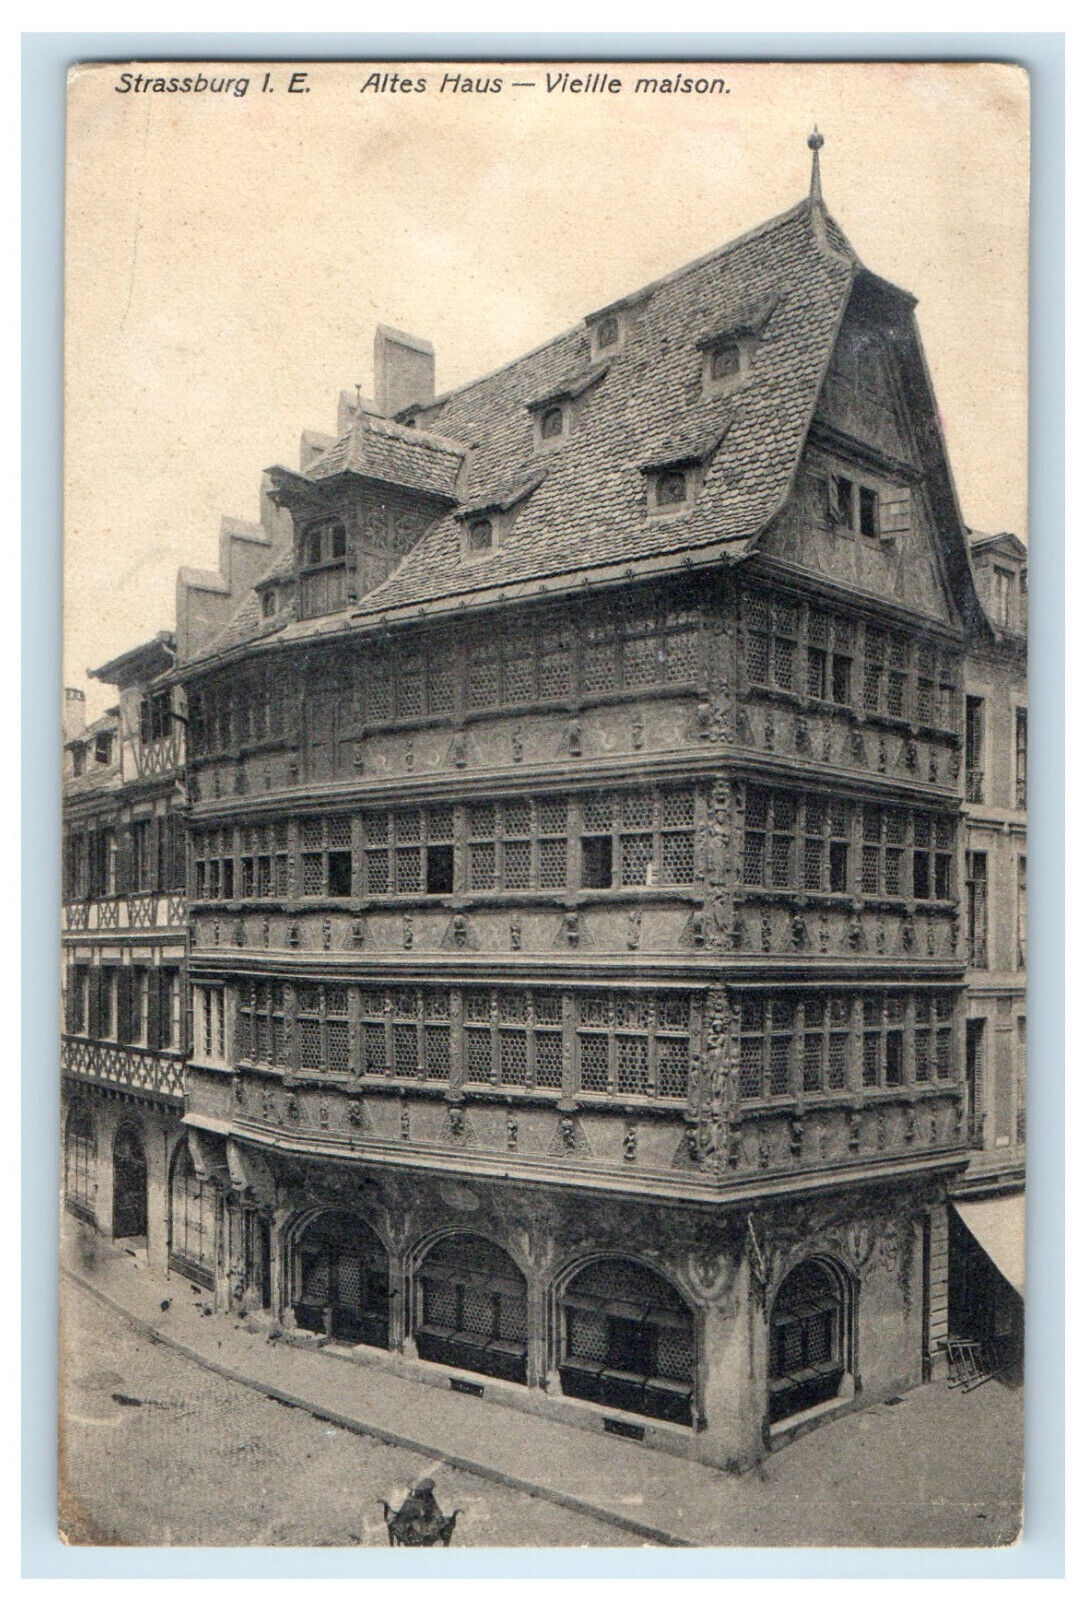 c1910s Altes Haus Vieille Malson Strassburg France Posted Vintage Postcard